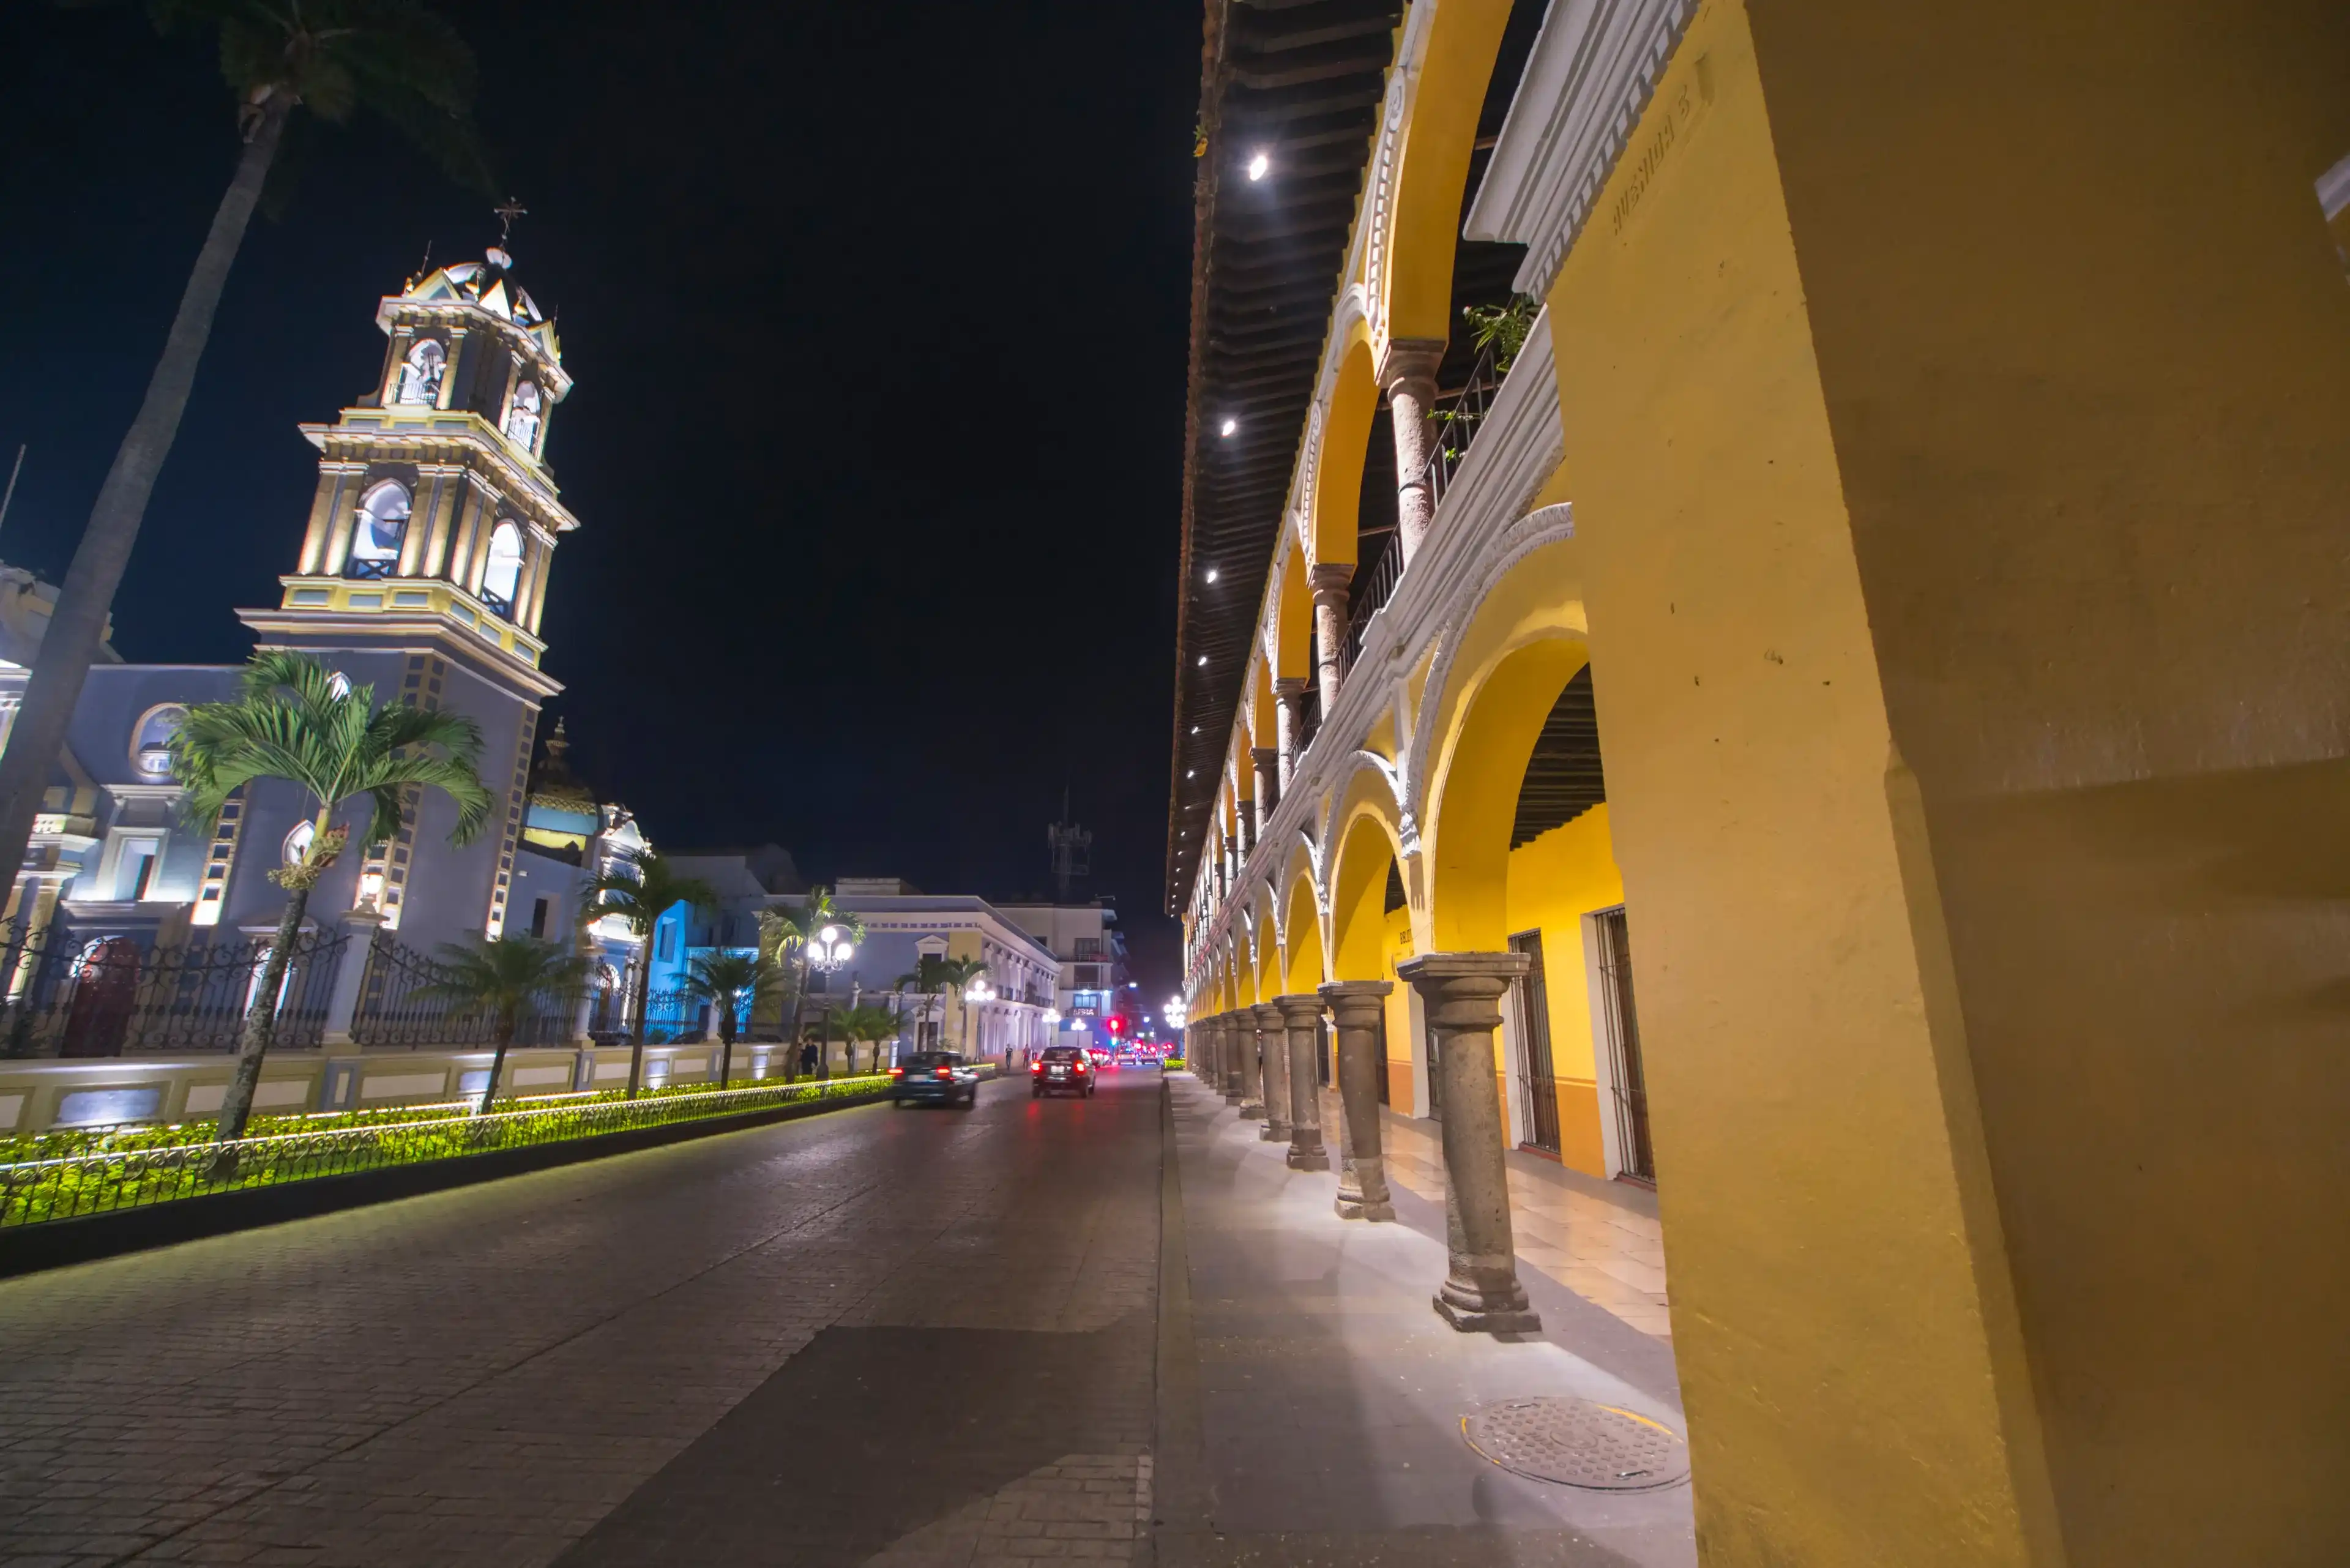 Best Córdoba hotels. Cheap hotels in Córdoba, Veracruz, Mexico